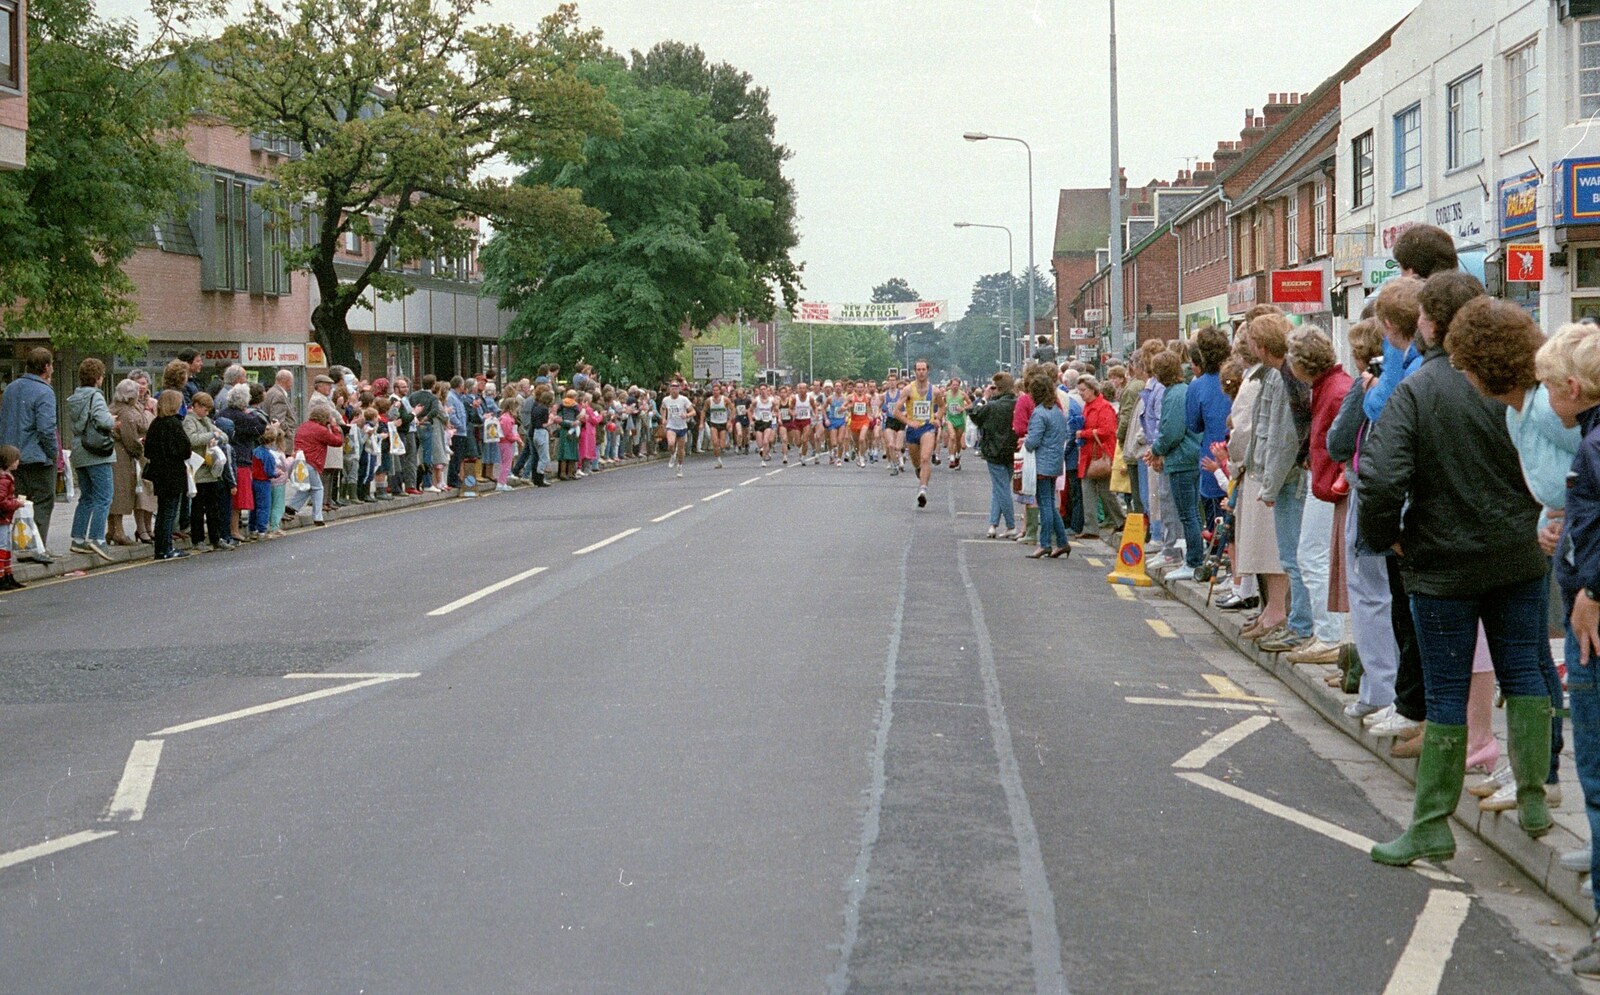 The marathon proper kicks off from The New Forest Marathon, New Milton, Hampshire - 14th September 1986